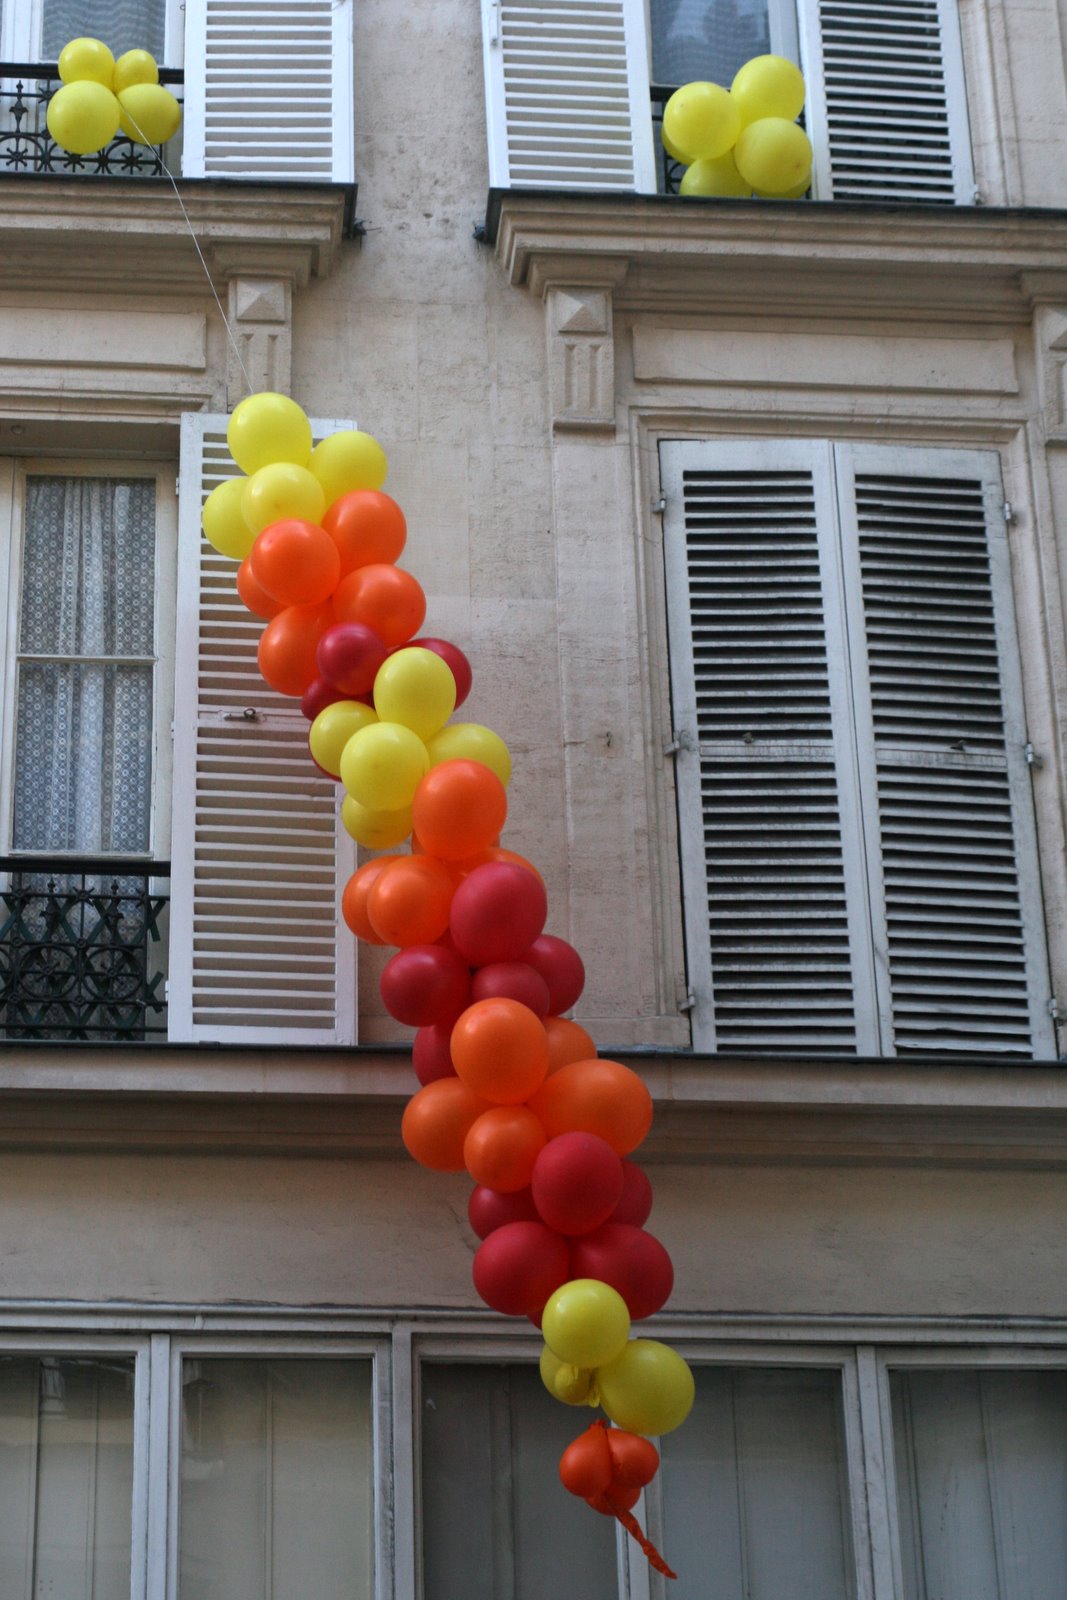 balloons in street